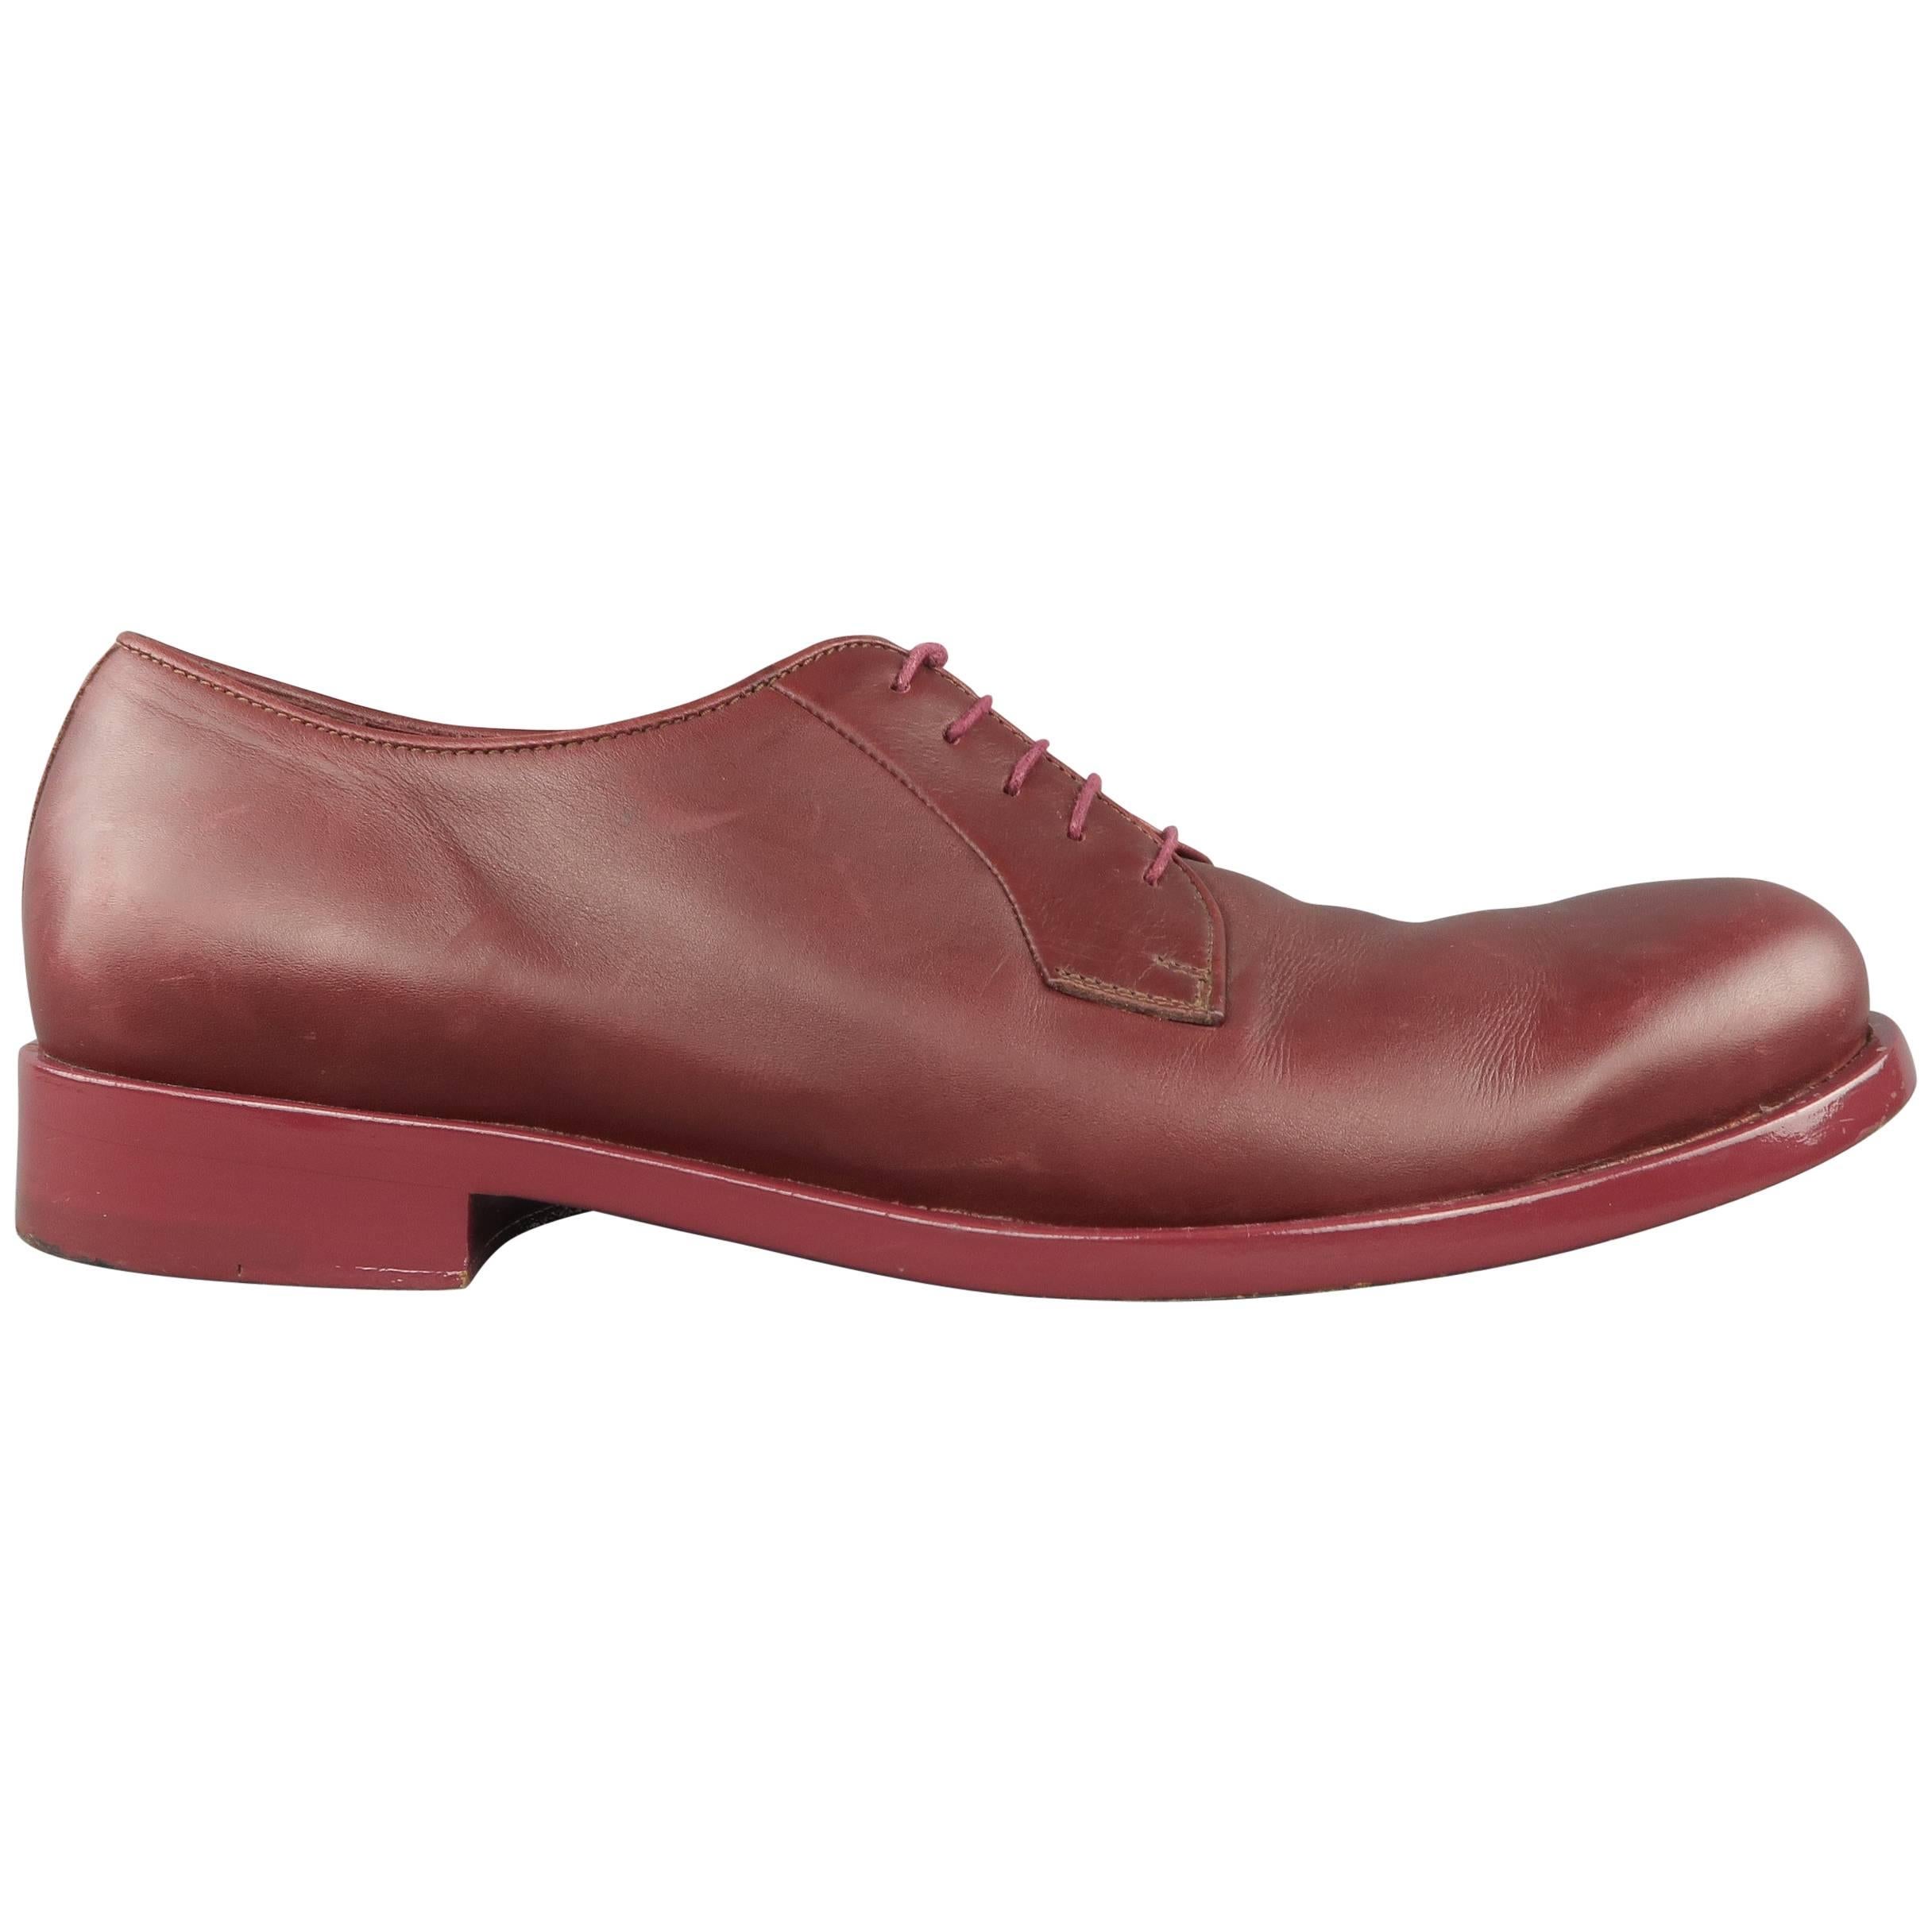 Men's JIL SANDER Shoes Size 10 Oxblood Burgundy  Leather Lace Up